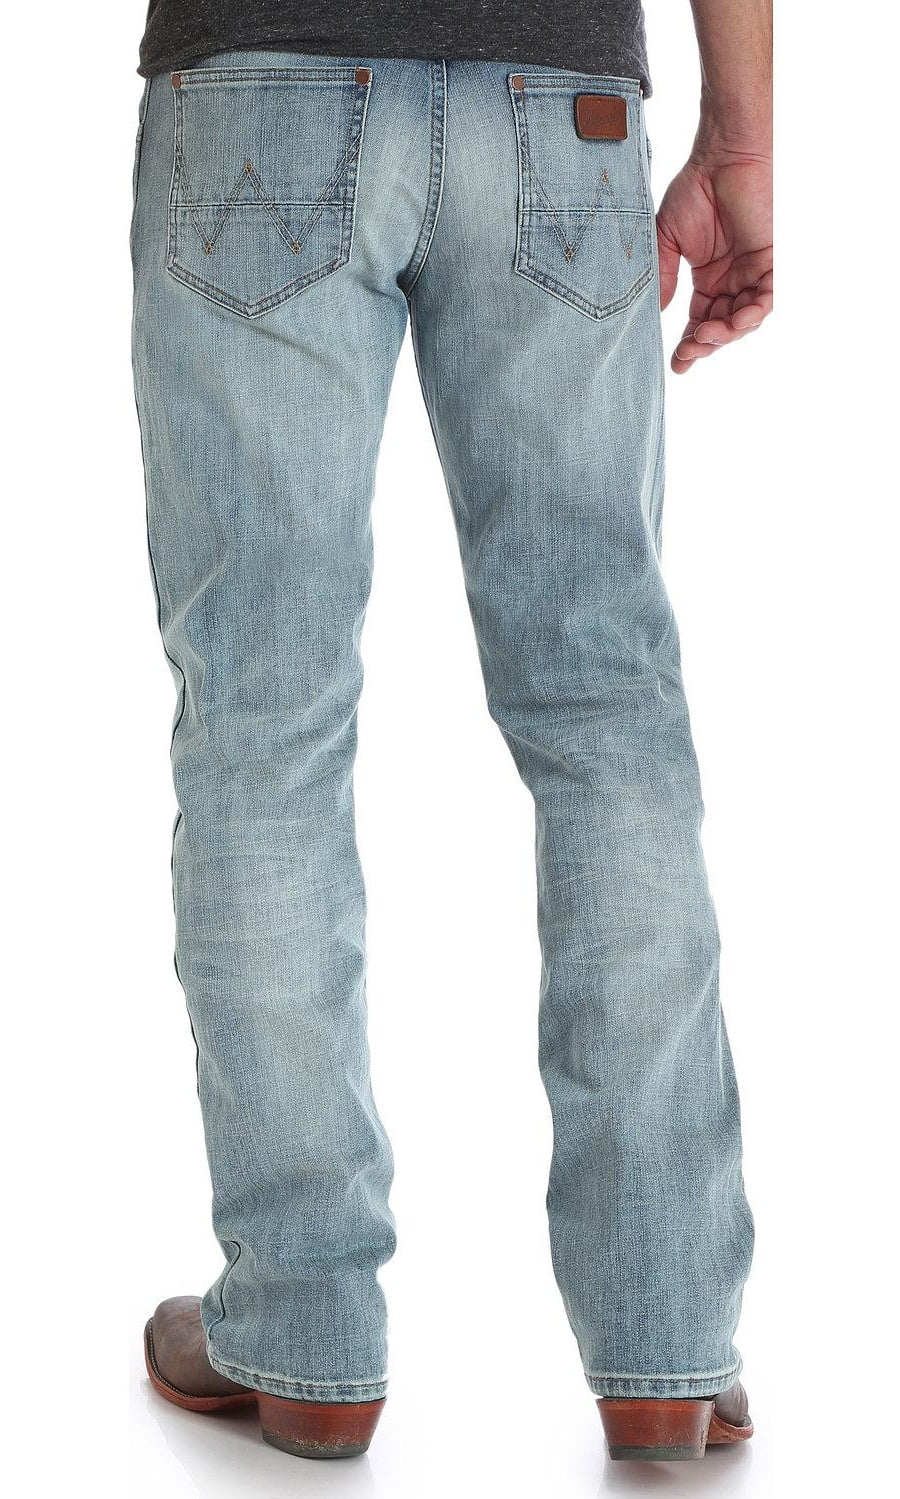 retro jeans mens